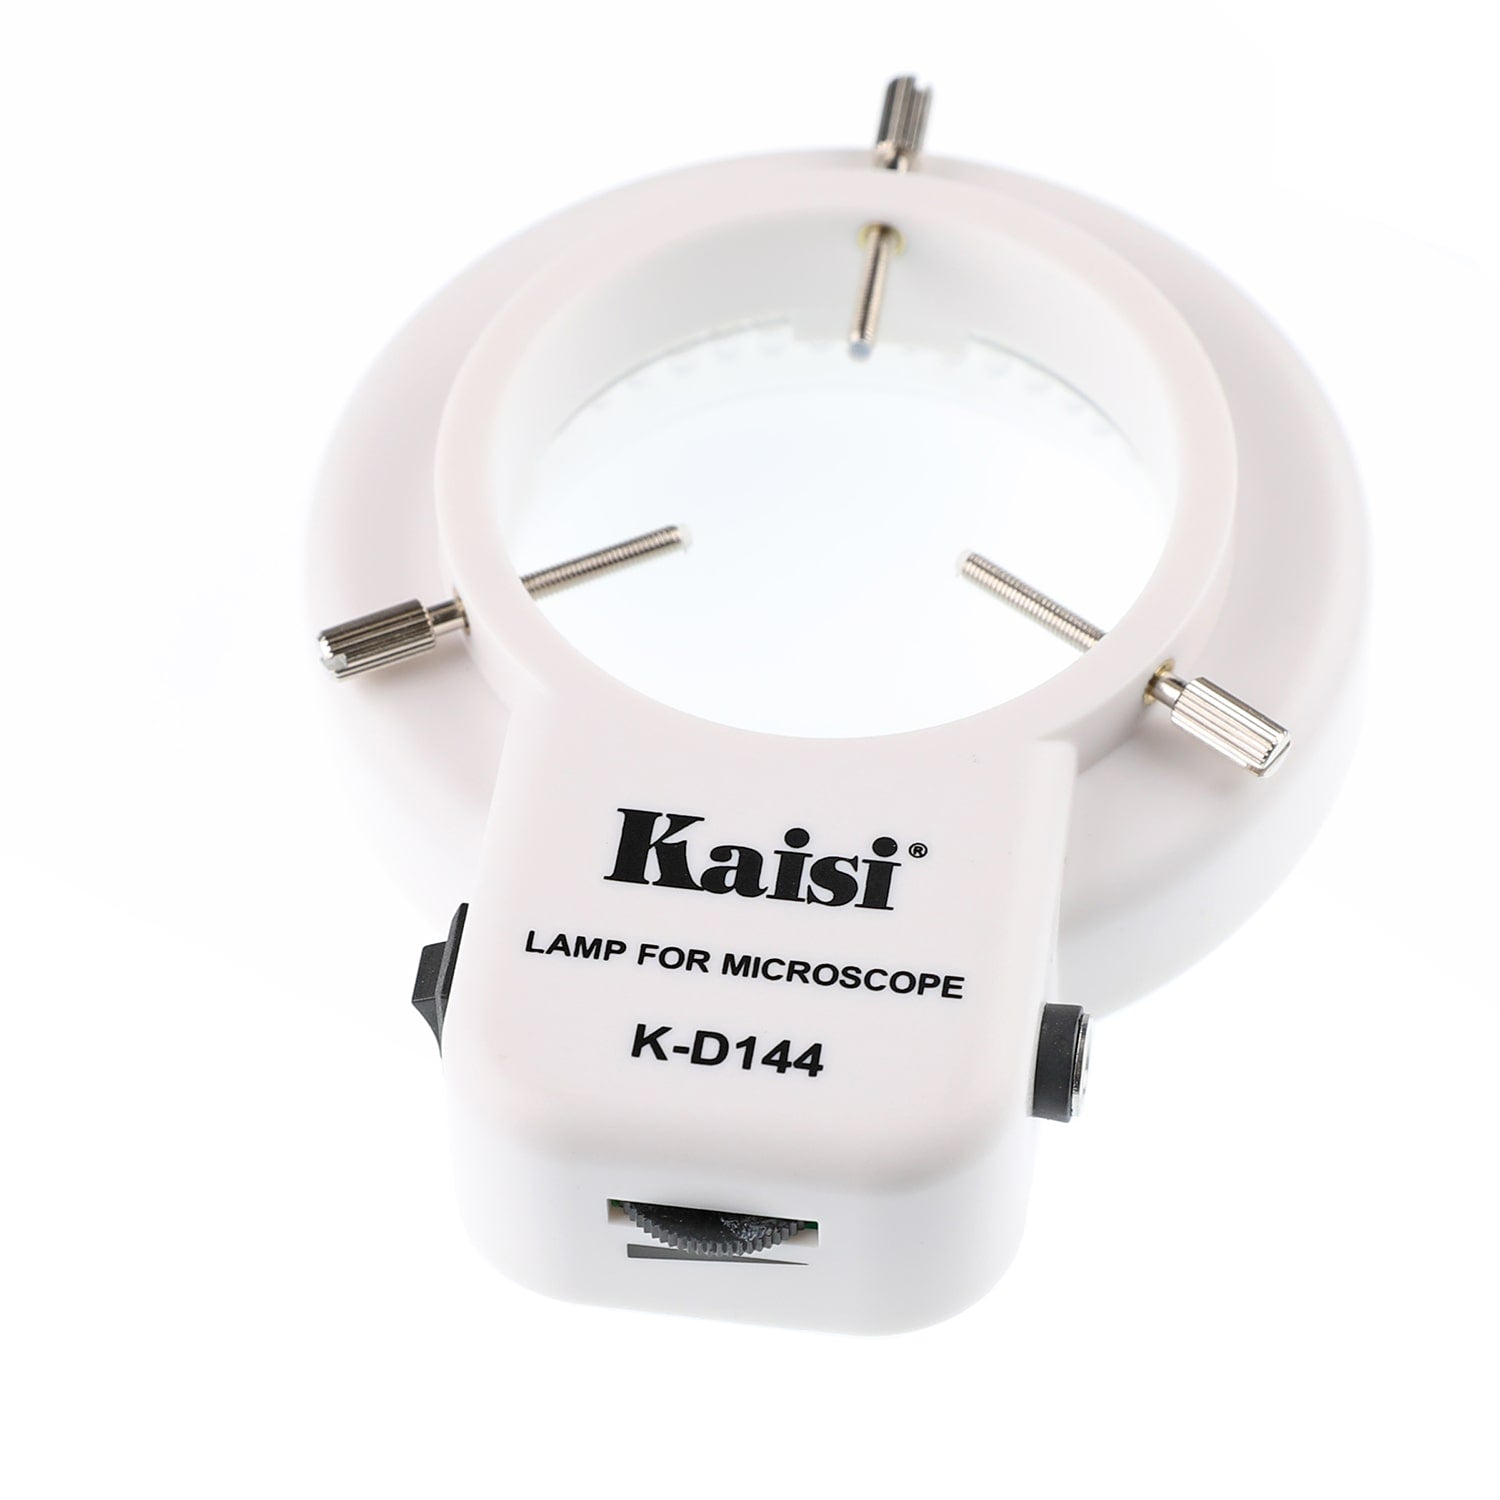 KAISI K-D144 ANNULAR ADJUSTABLE RING LED LAMP FOR MICROSCOPE